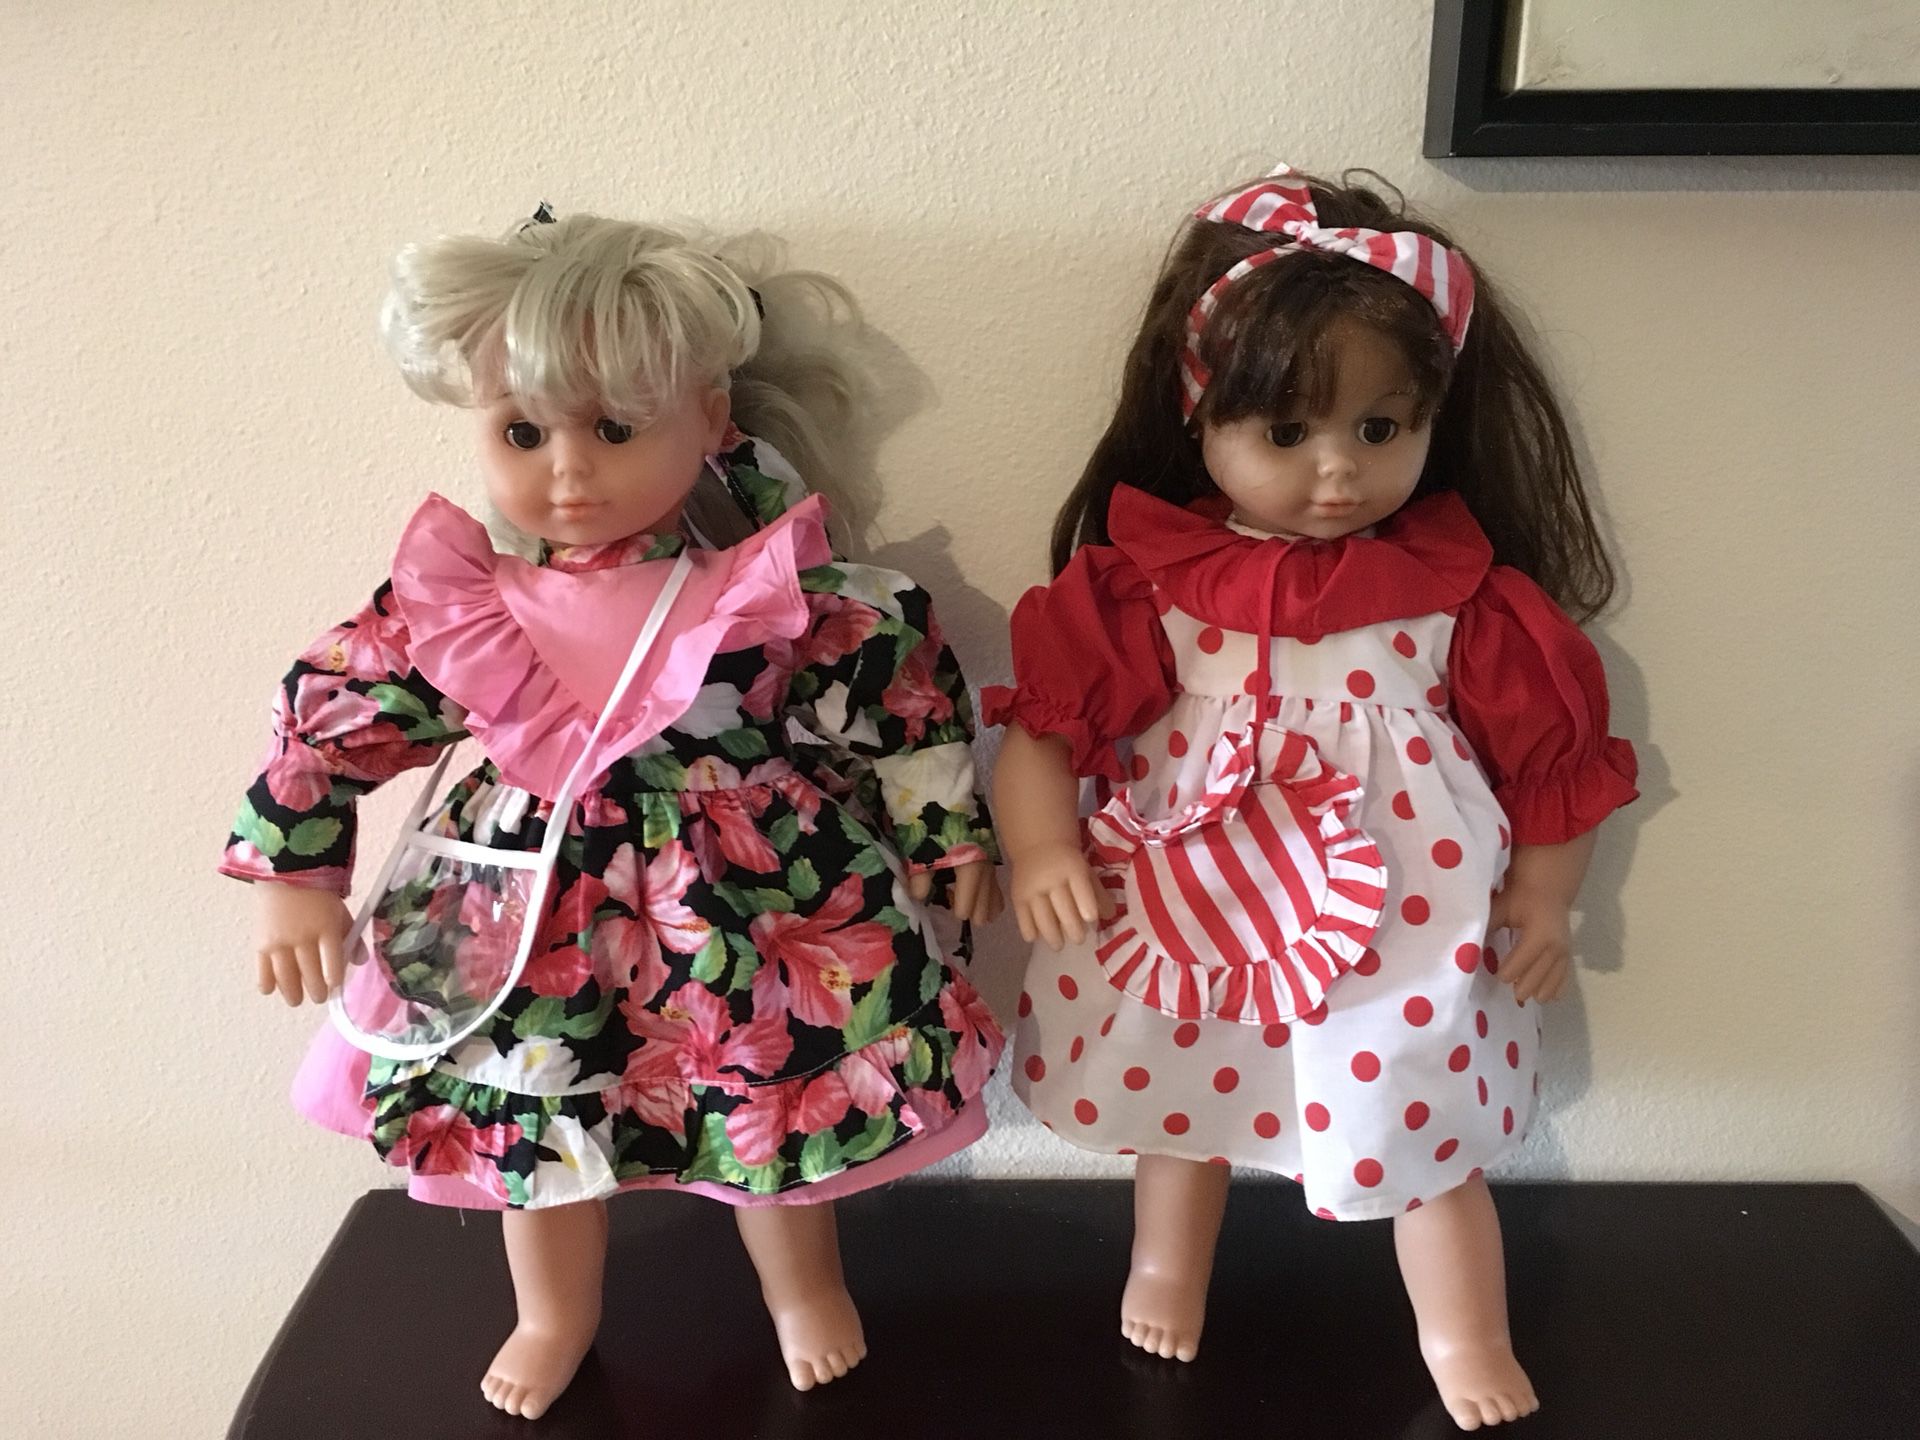 Beautiful Plastic Dolls 21” 5 $ each